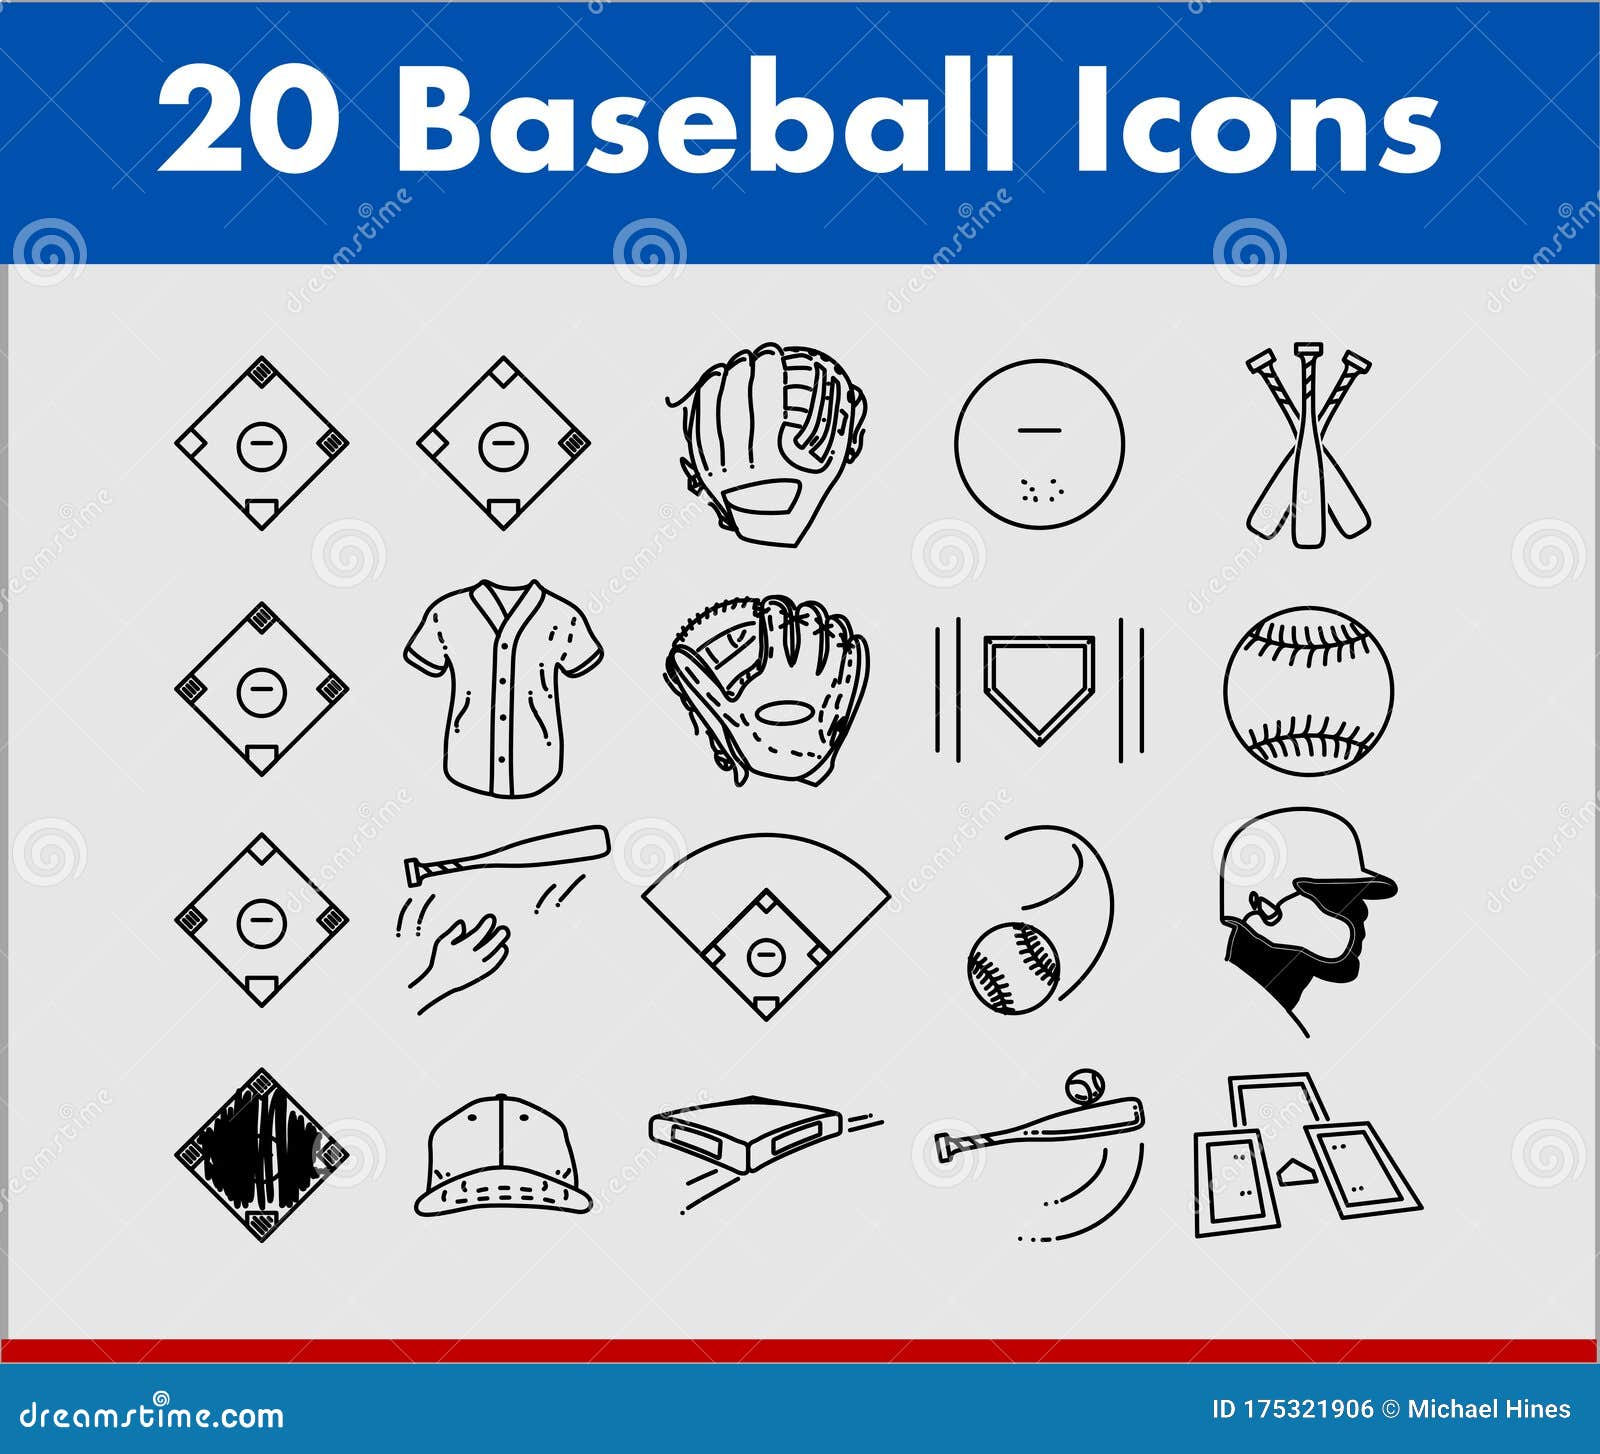 20-baseball-icons-baseball-diamond-scoring-symbols-stock-vector-illustration-of-mound